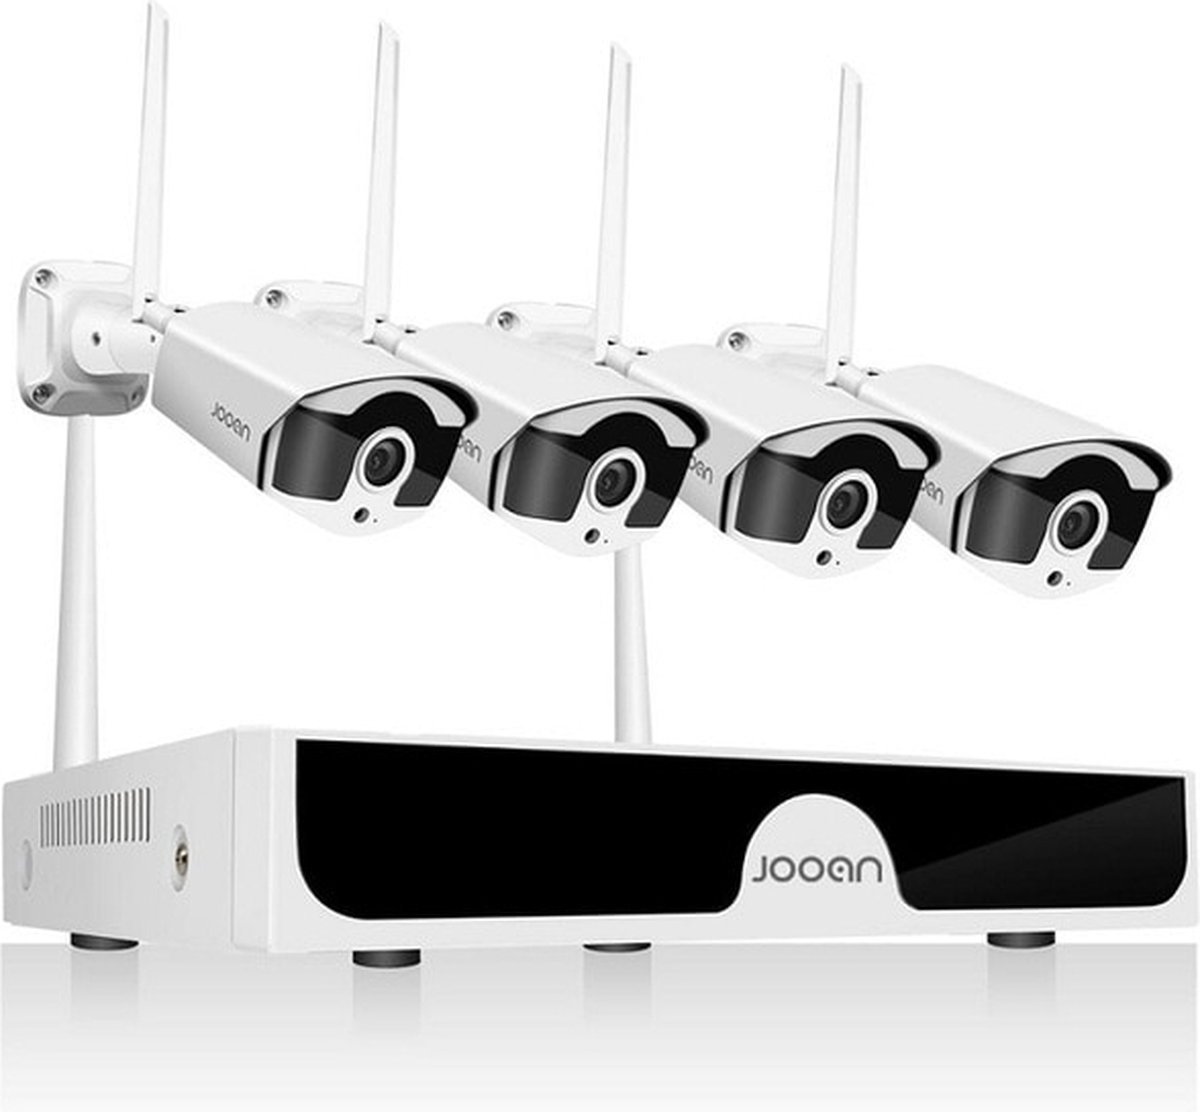 CCTV - Beveiligingscamera set met 4 Cameras Outdoor Buiten - Home Security Camera Systeem - Wifi Camera Set - Beveiligingscamera - 4 Camera’s - Nachtzicht - Motion Detector.